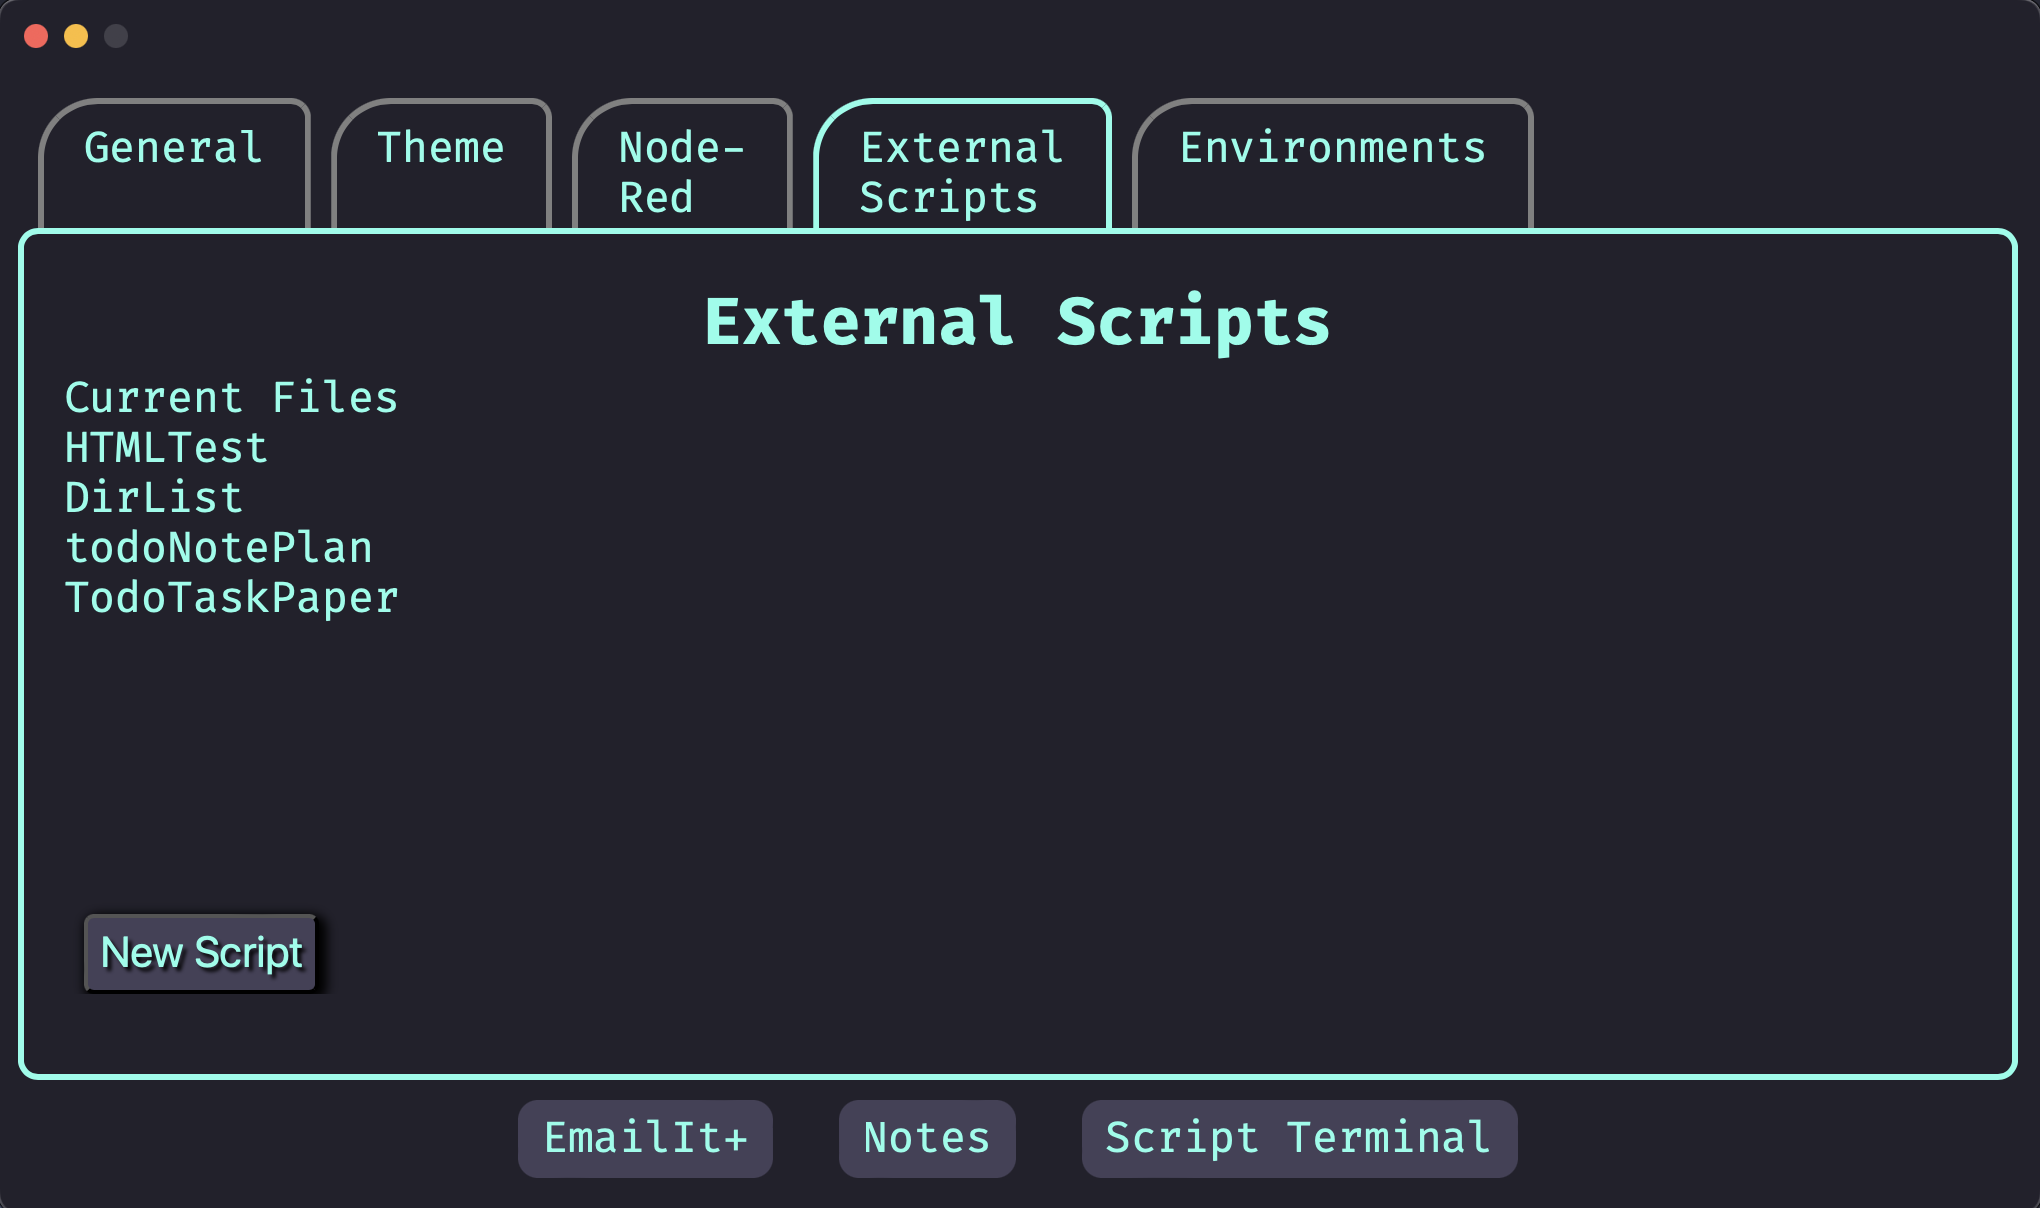 External Scripts Preferences